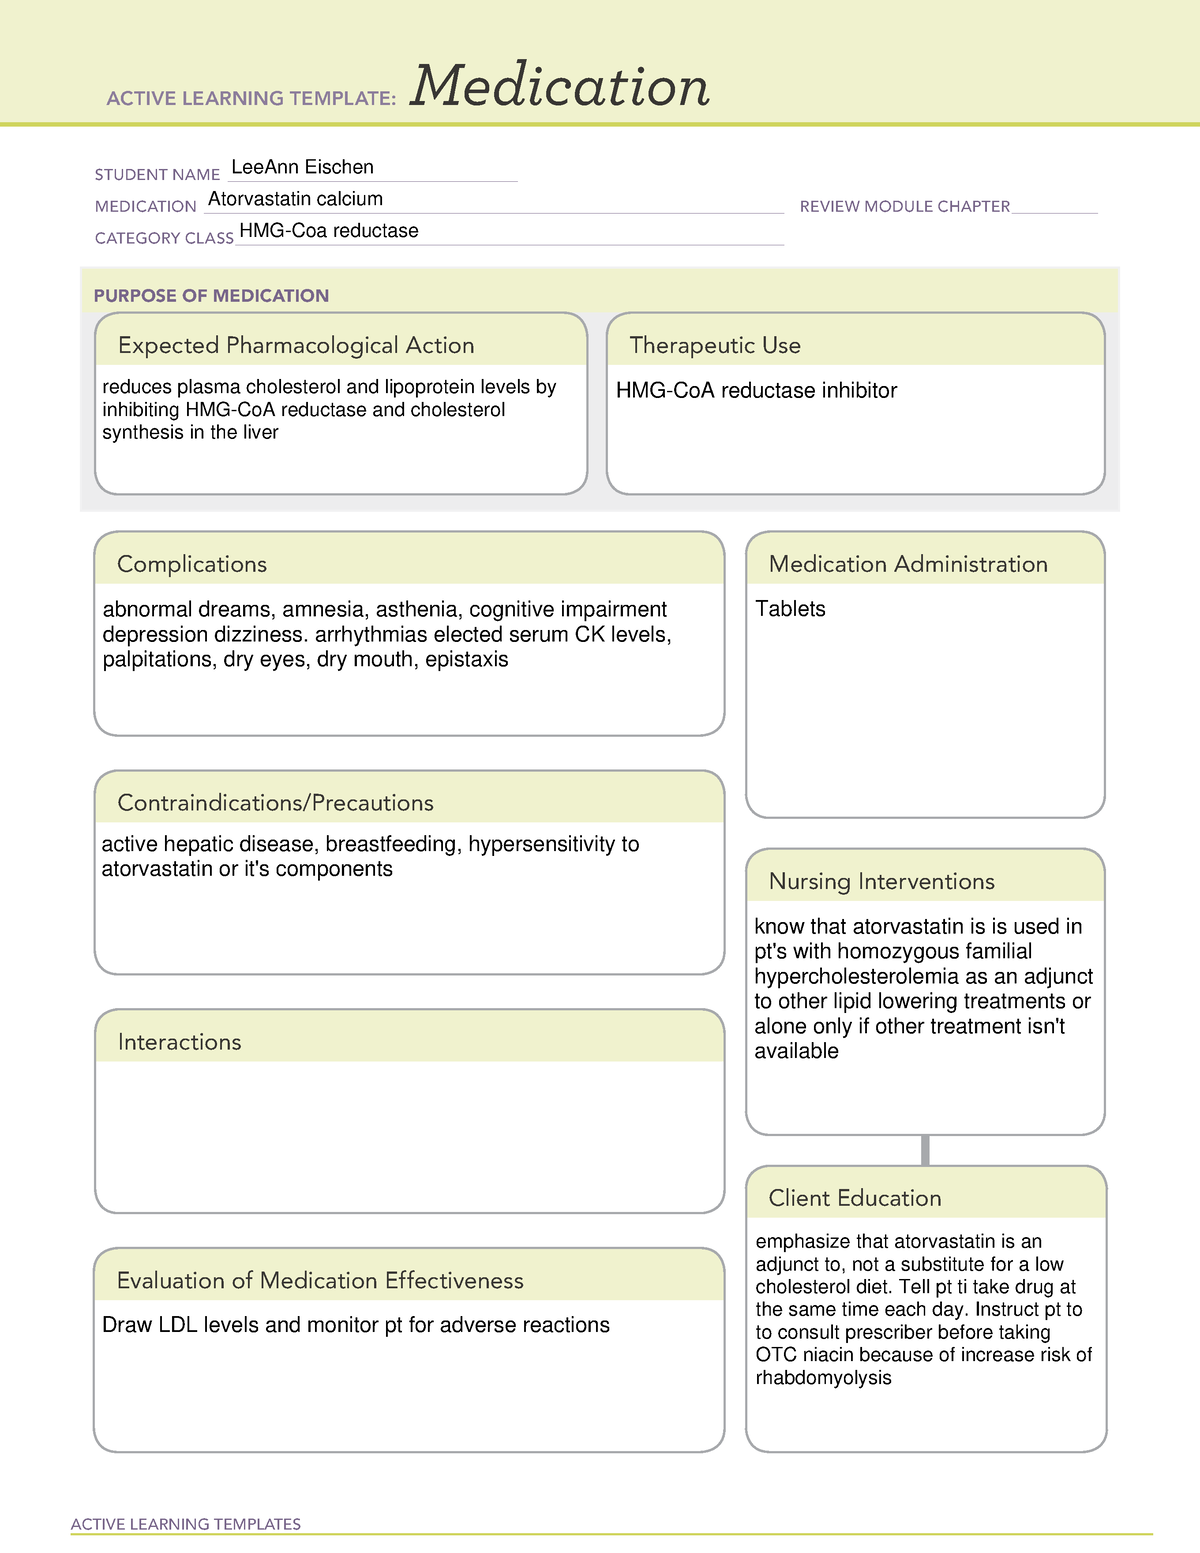 Atorvastatin Medication Sheet Template ATI ACTIVE LEARNING TEMPLATES